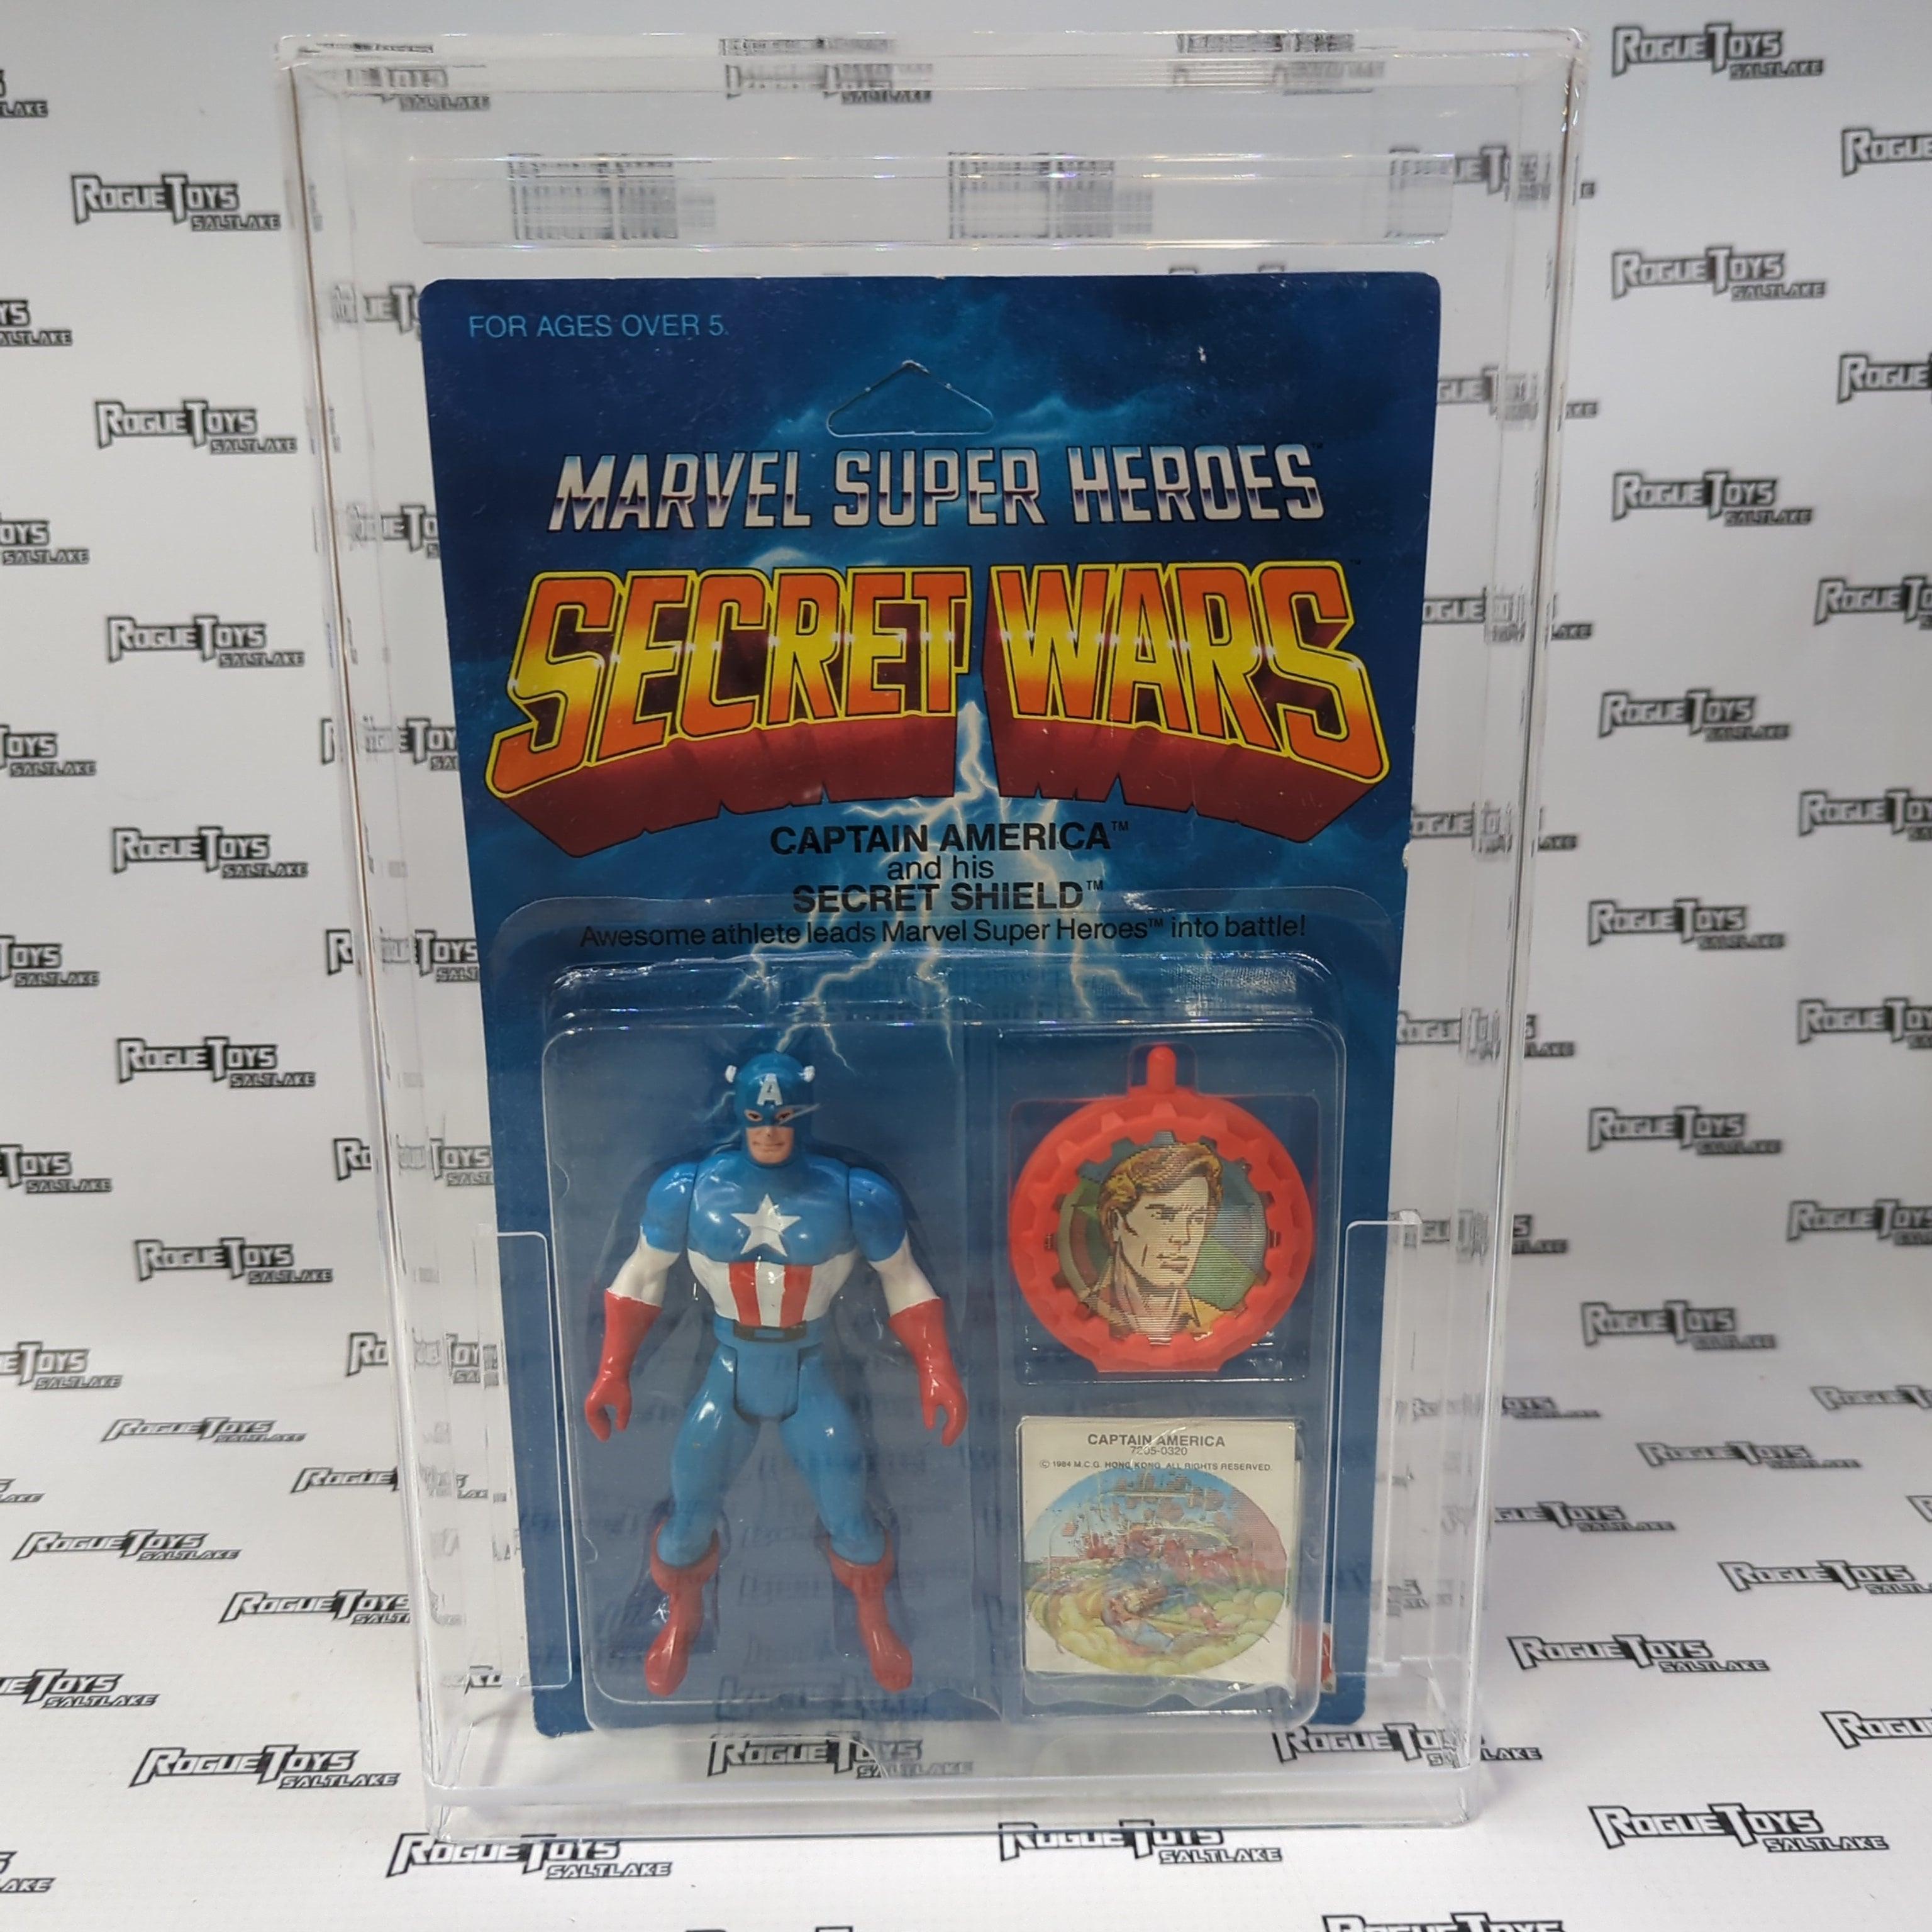 Mattel Marvel Super Heroes Secret Wars Captain America and his Secret Shield